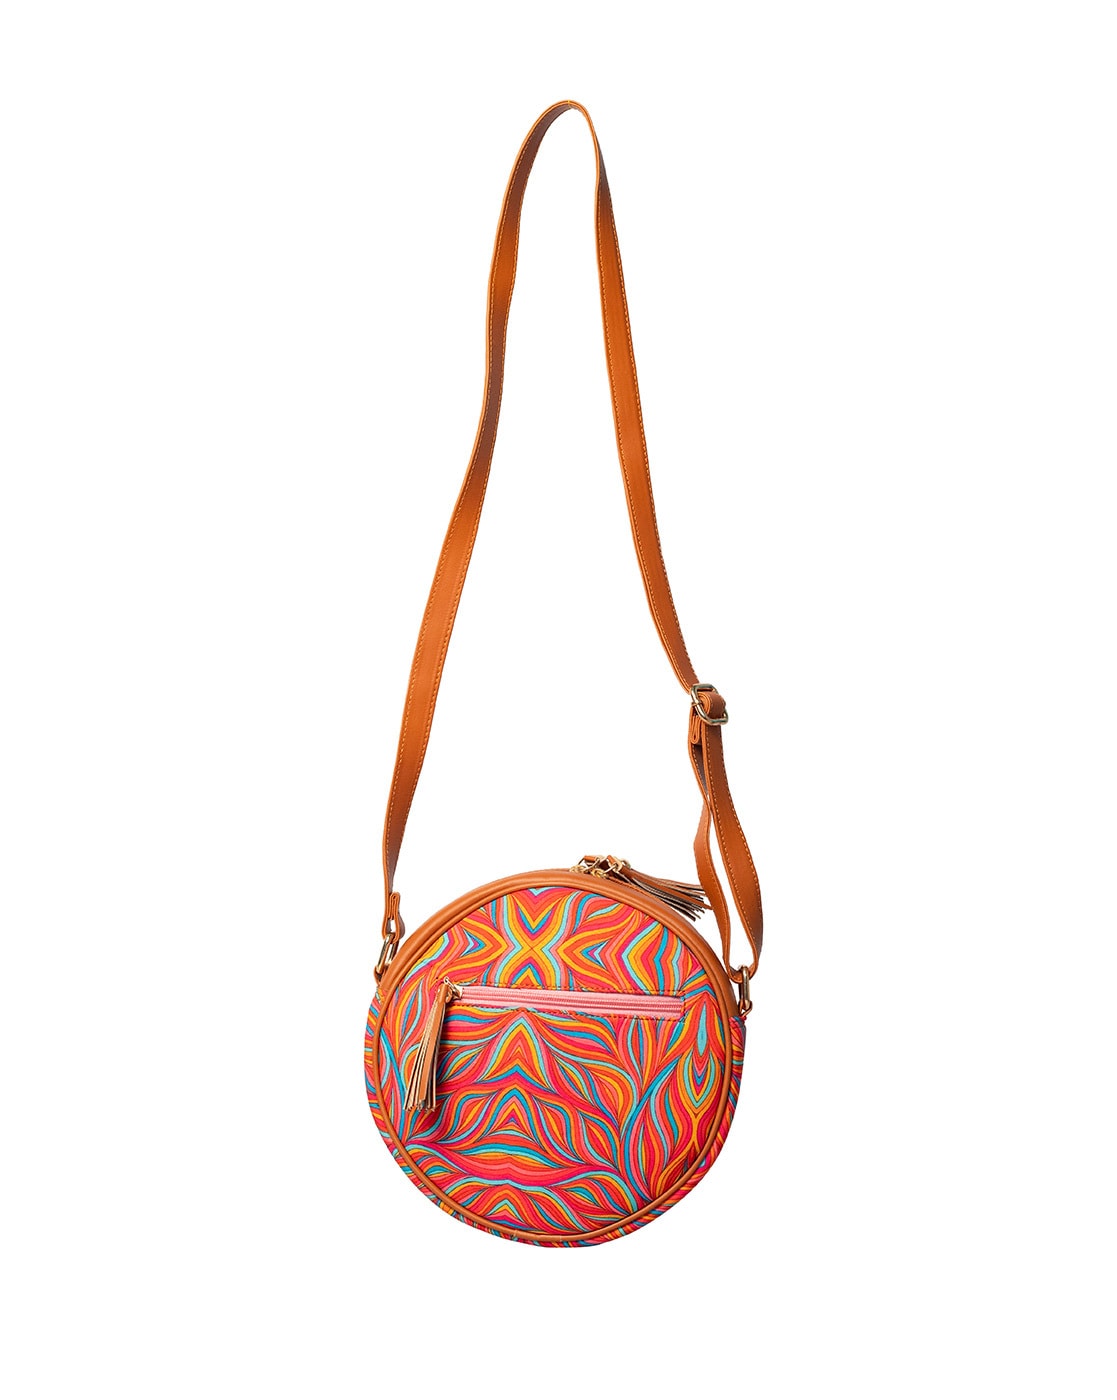 Hobo, Tote or Satchel - What's the Difference? – Bolsa Nova Handbags